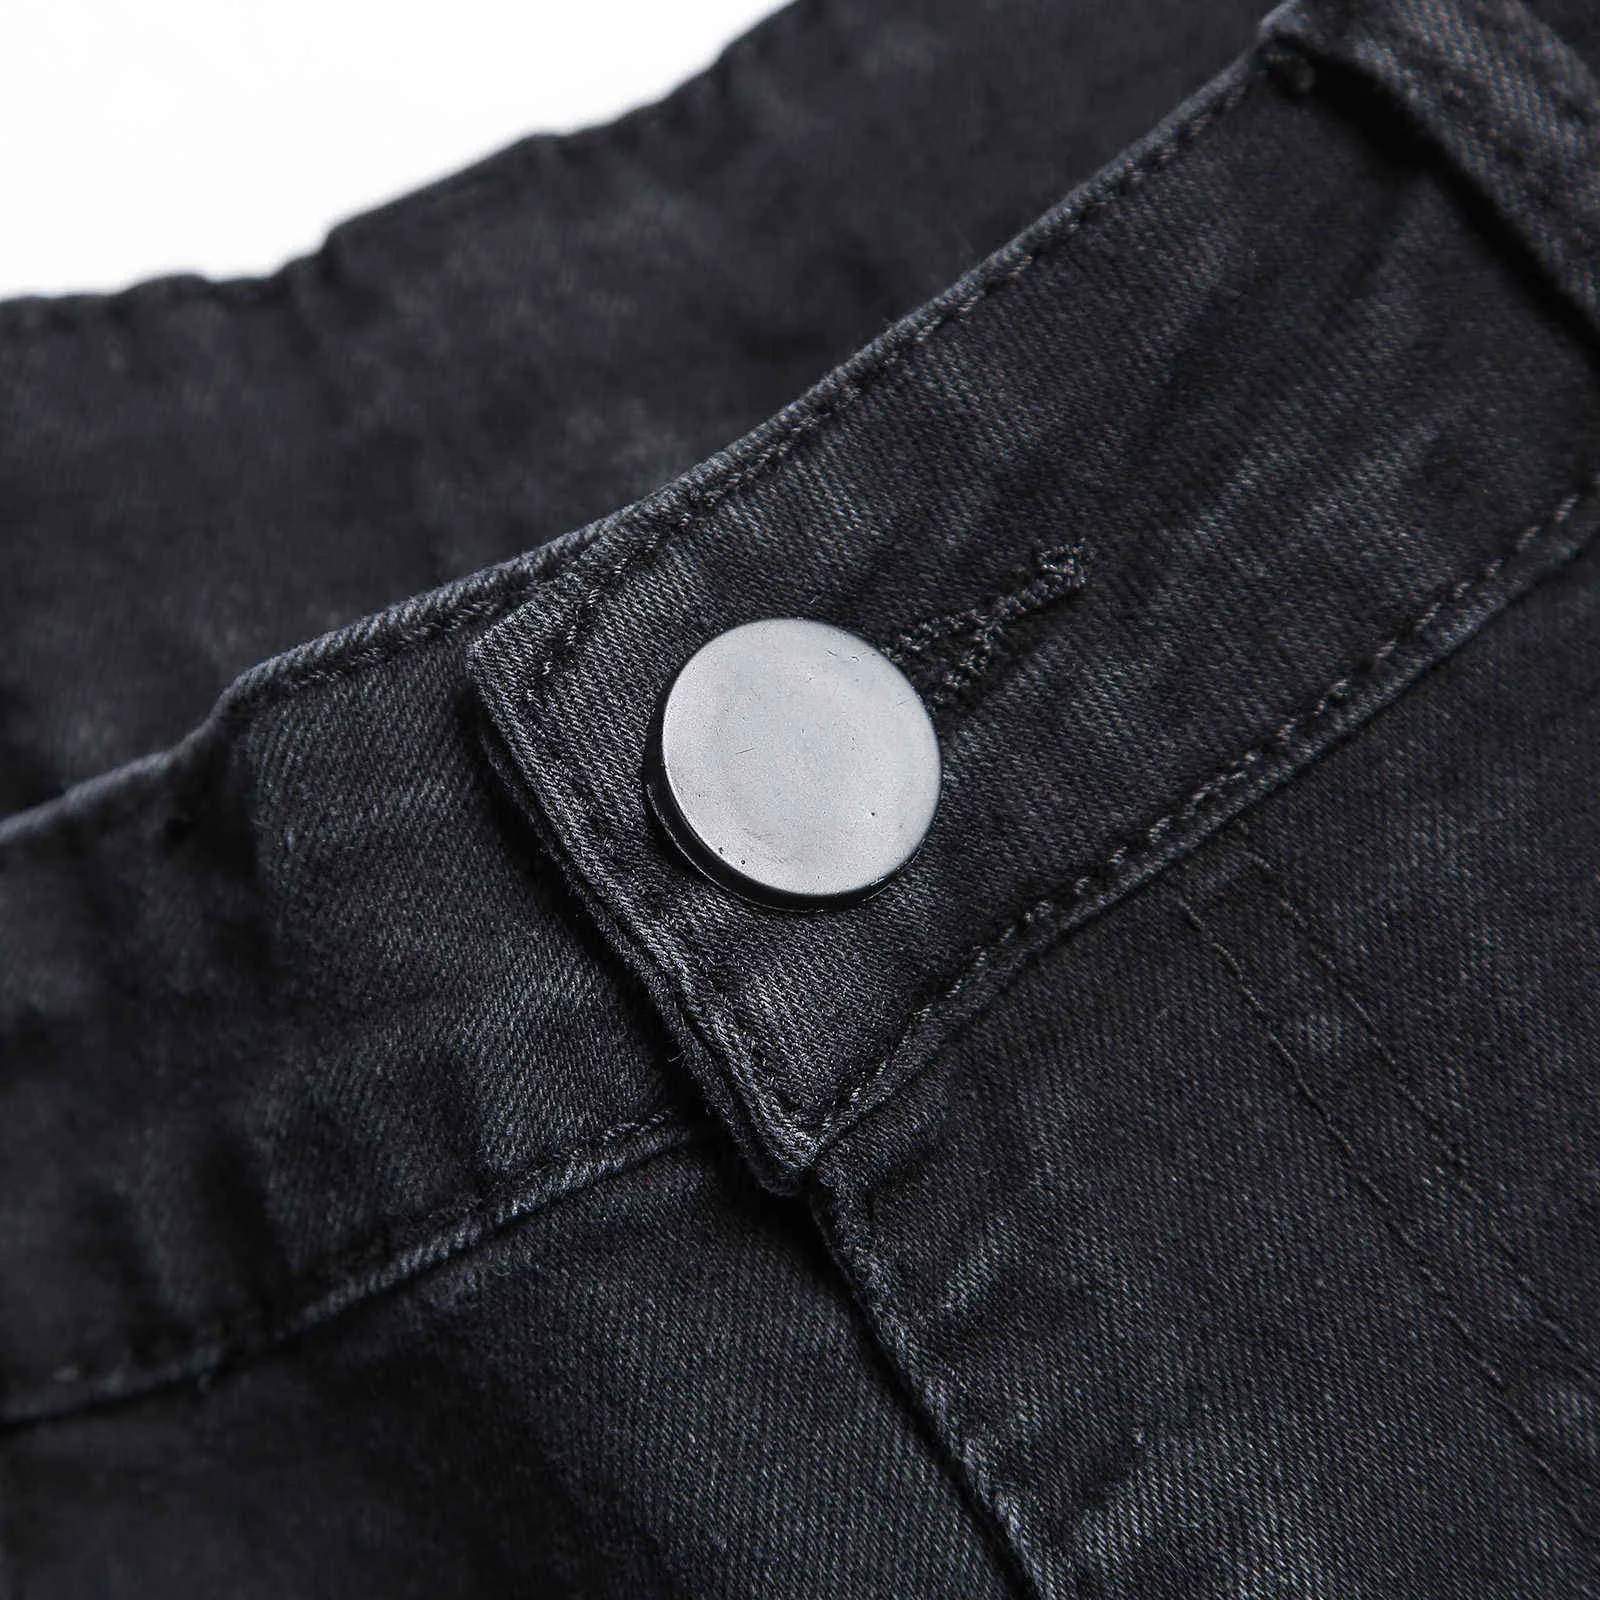 2020 2 Styles Men Big Pocket Skinny Jeans Zipper Slim High Quality Jeans Casual Sport Corset Jeans M-3XL H1116258P